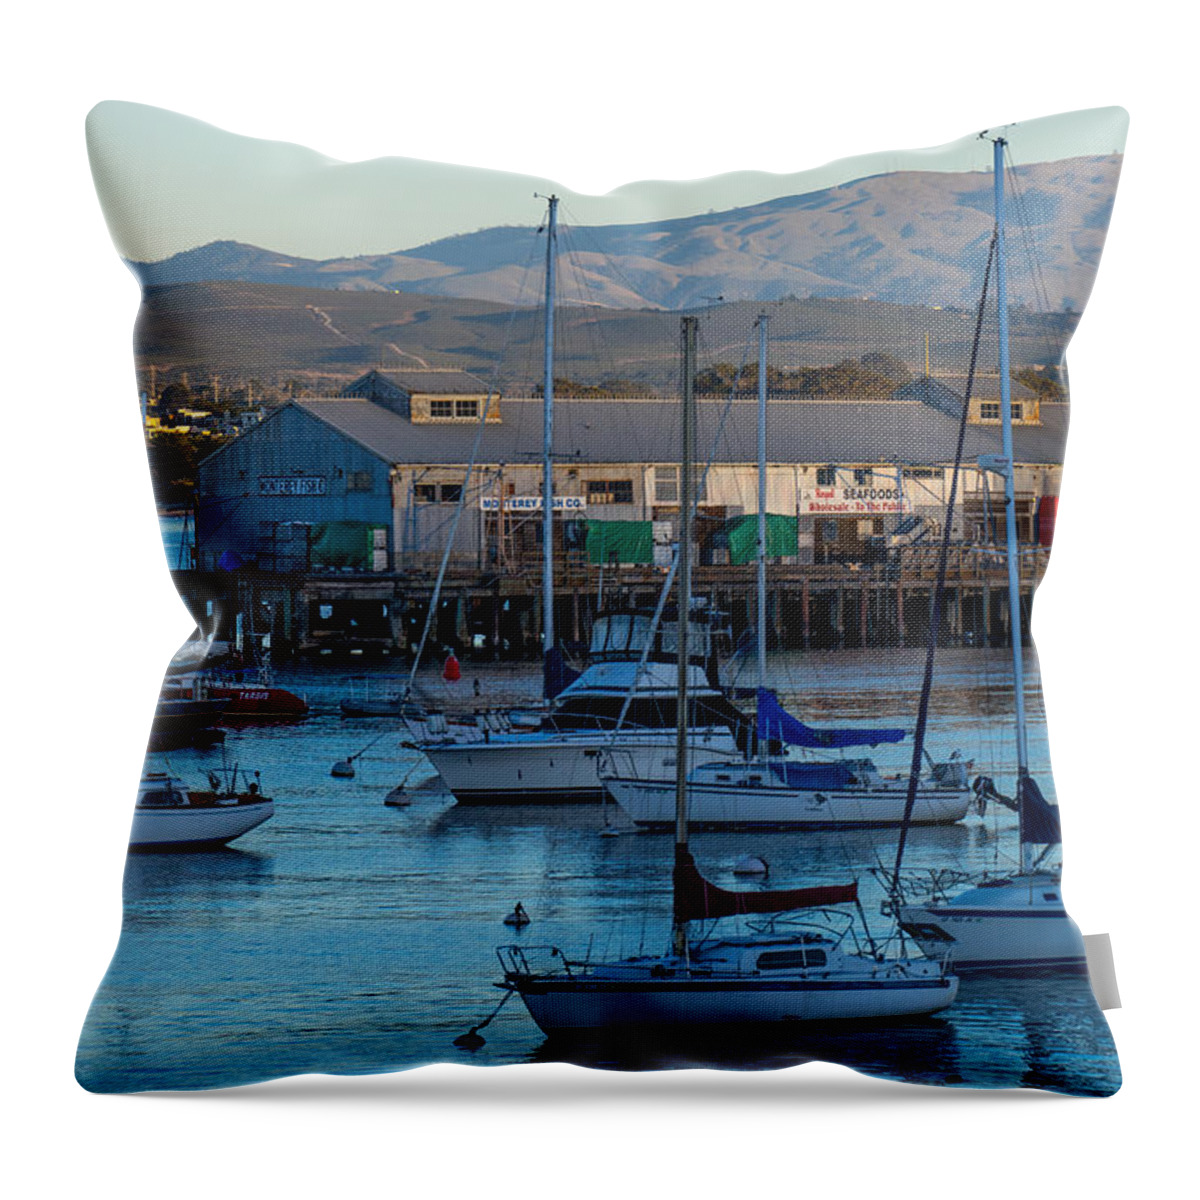 Monterey Throw Pillow featuring the photograph Monterey Wharf at Sunset by Derek Dean